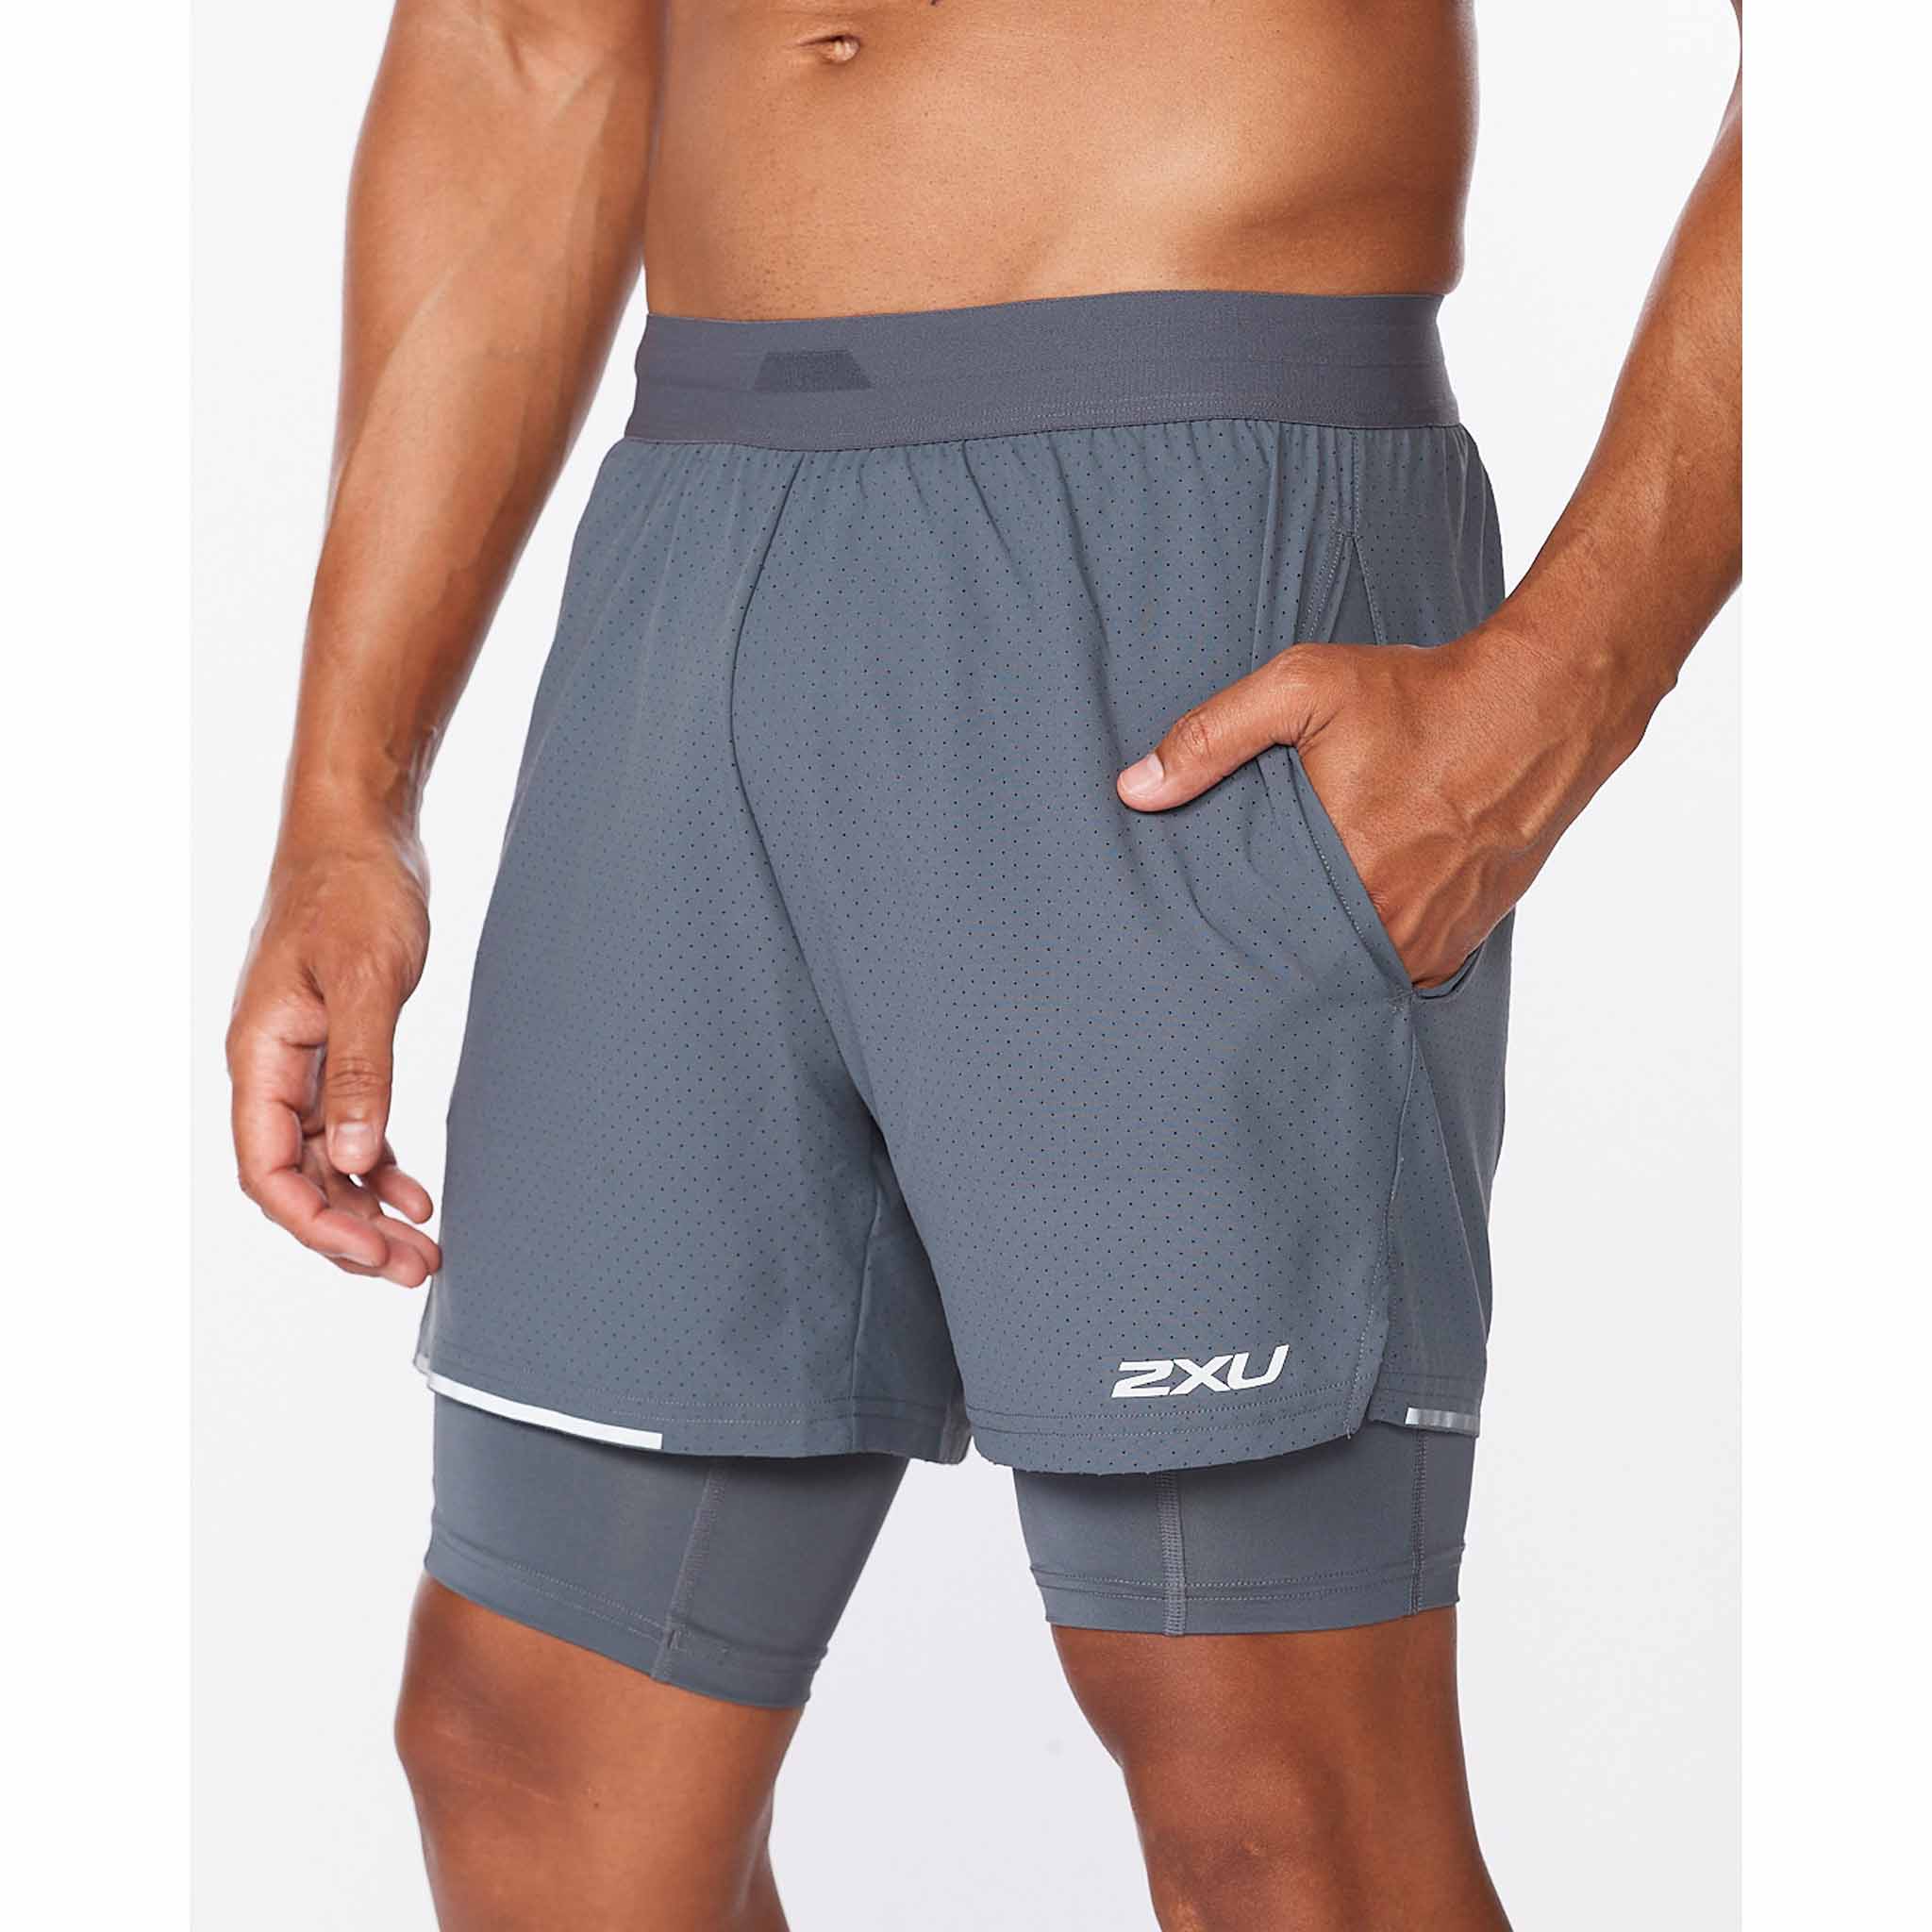 2XU 2-in-1 5-inch shorts men - Soccer Sport Fitness